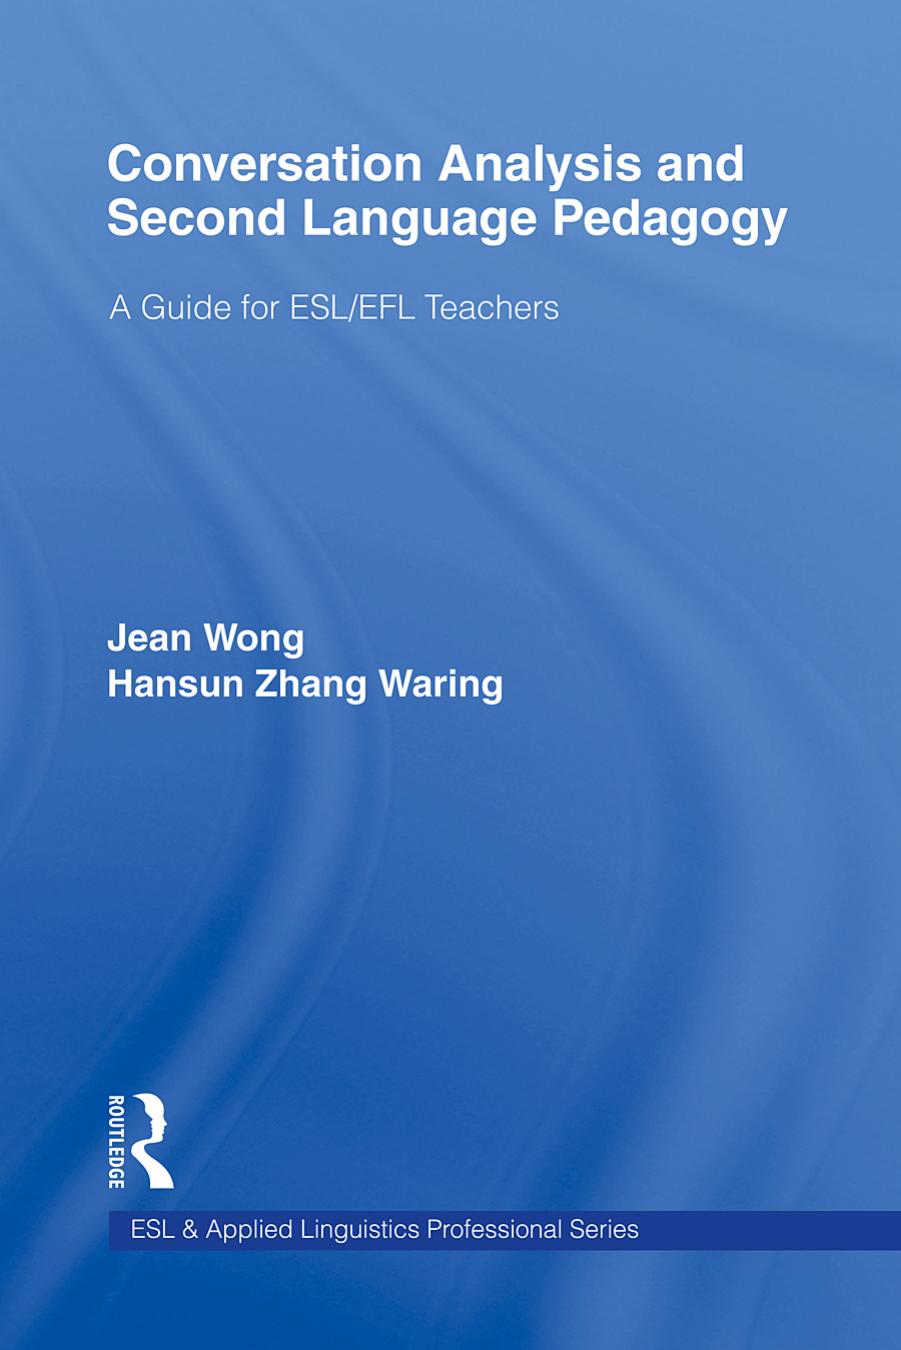 Conversation Analysis and Second Language Pedagogy_ A Guide for ESL_EFL Teachers - Jean Wong & Hansun Zhang Waring.jpg